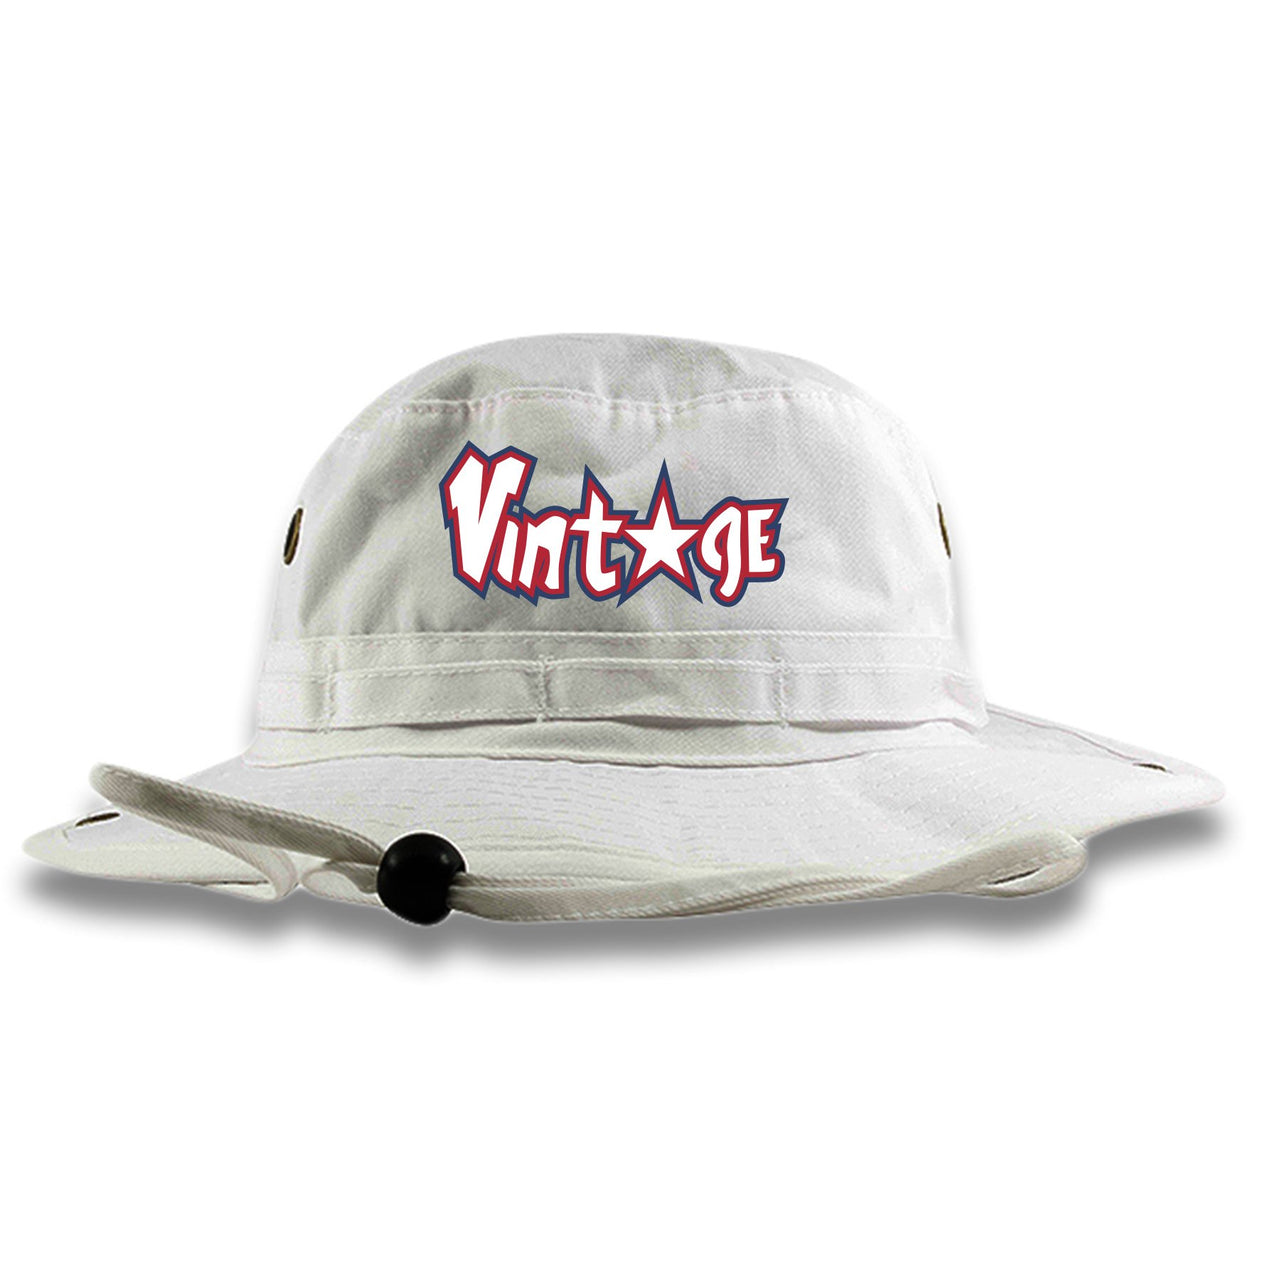 USA One Foams Bucket Hat | Vintage Star, White